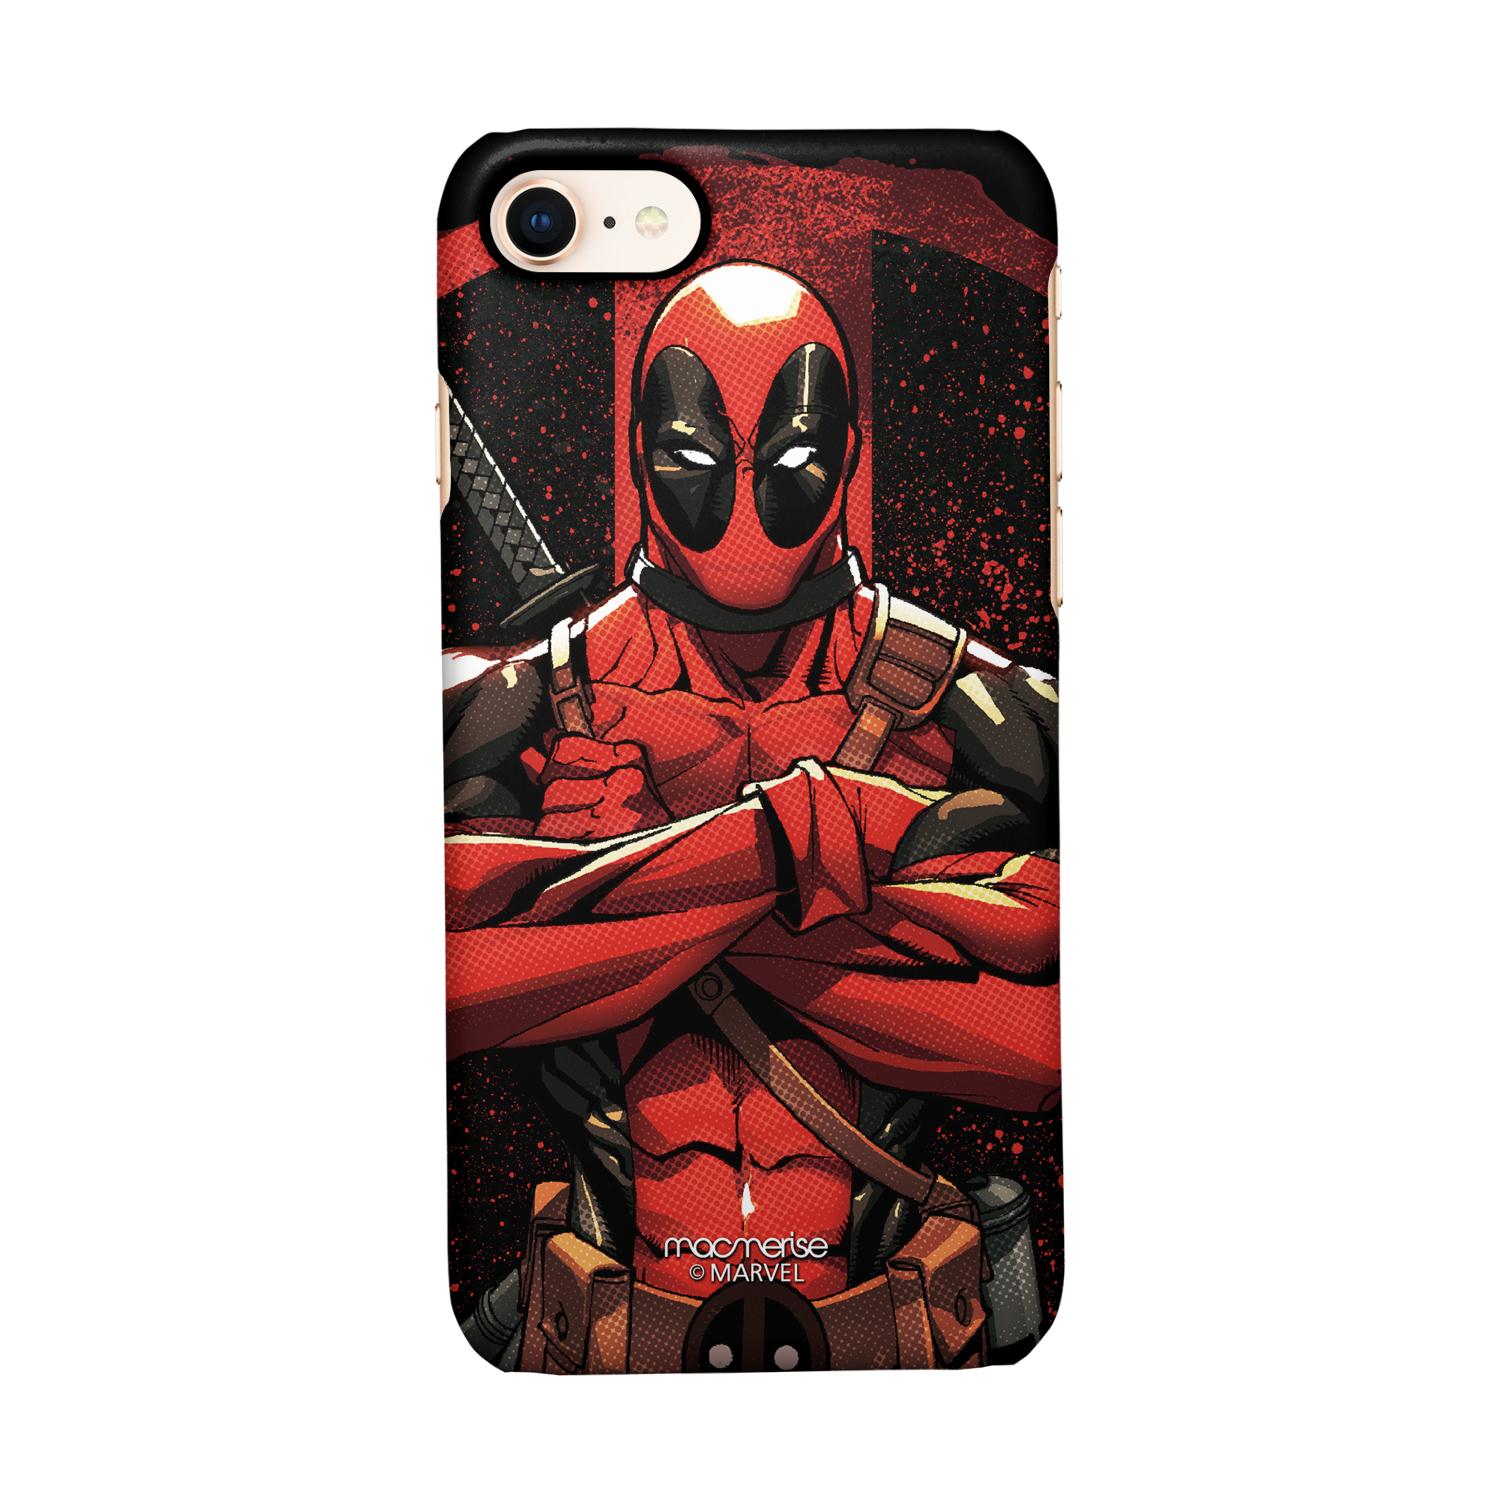 Buy Deadpool Stance - Sleek Phone Case for iPhone 7 Online